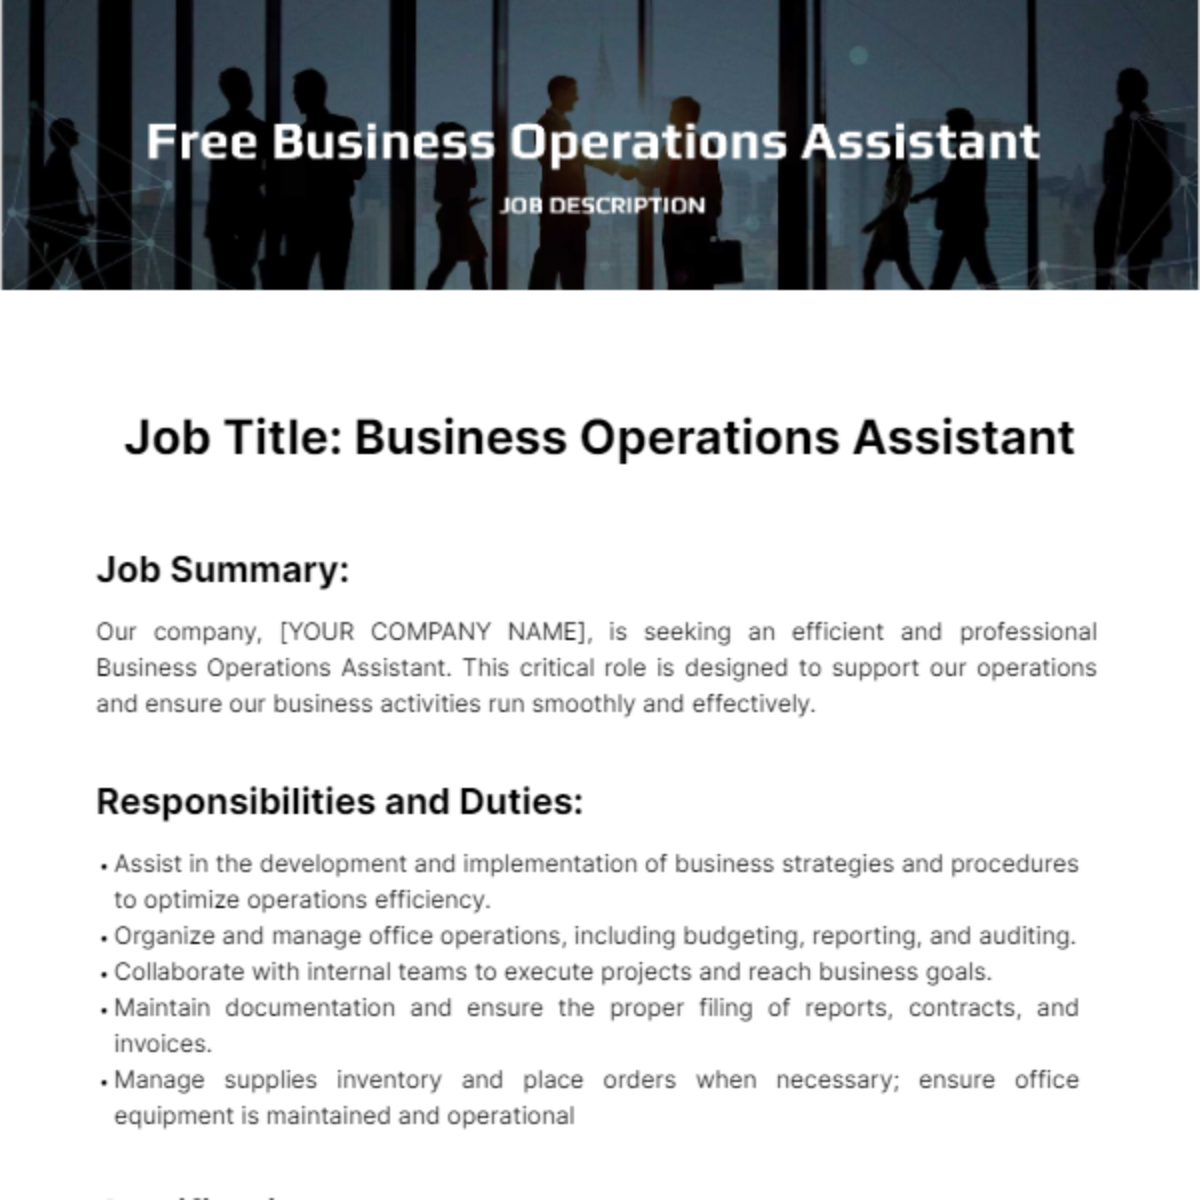 Free Business Operations Assistant Job Description Template